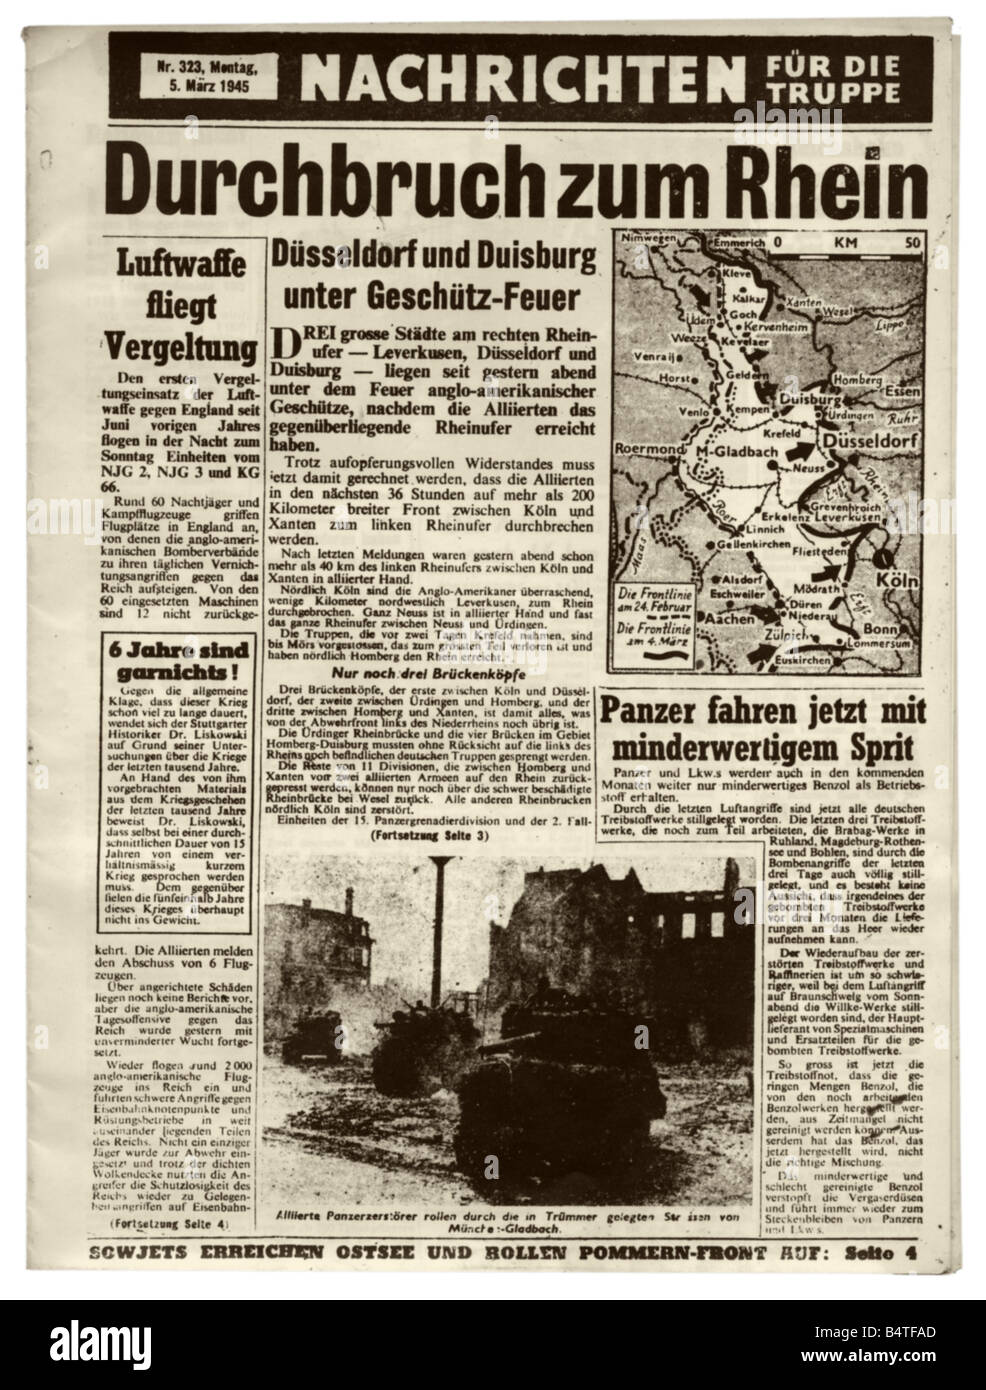 press/media, magazines, 'Nachrichten für die Truppe', number 323, Monday 5.3.1945, title, allied forces marching towards river Rhine , , Stock Photo